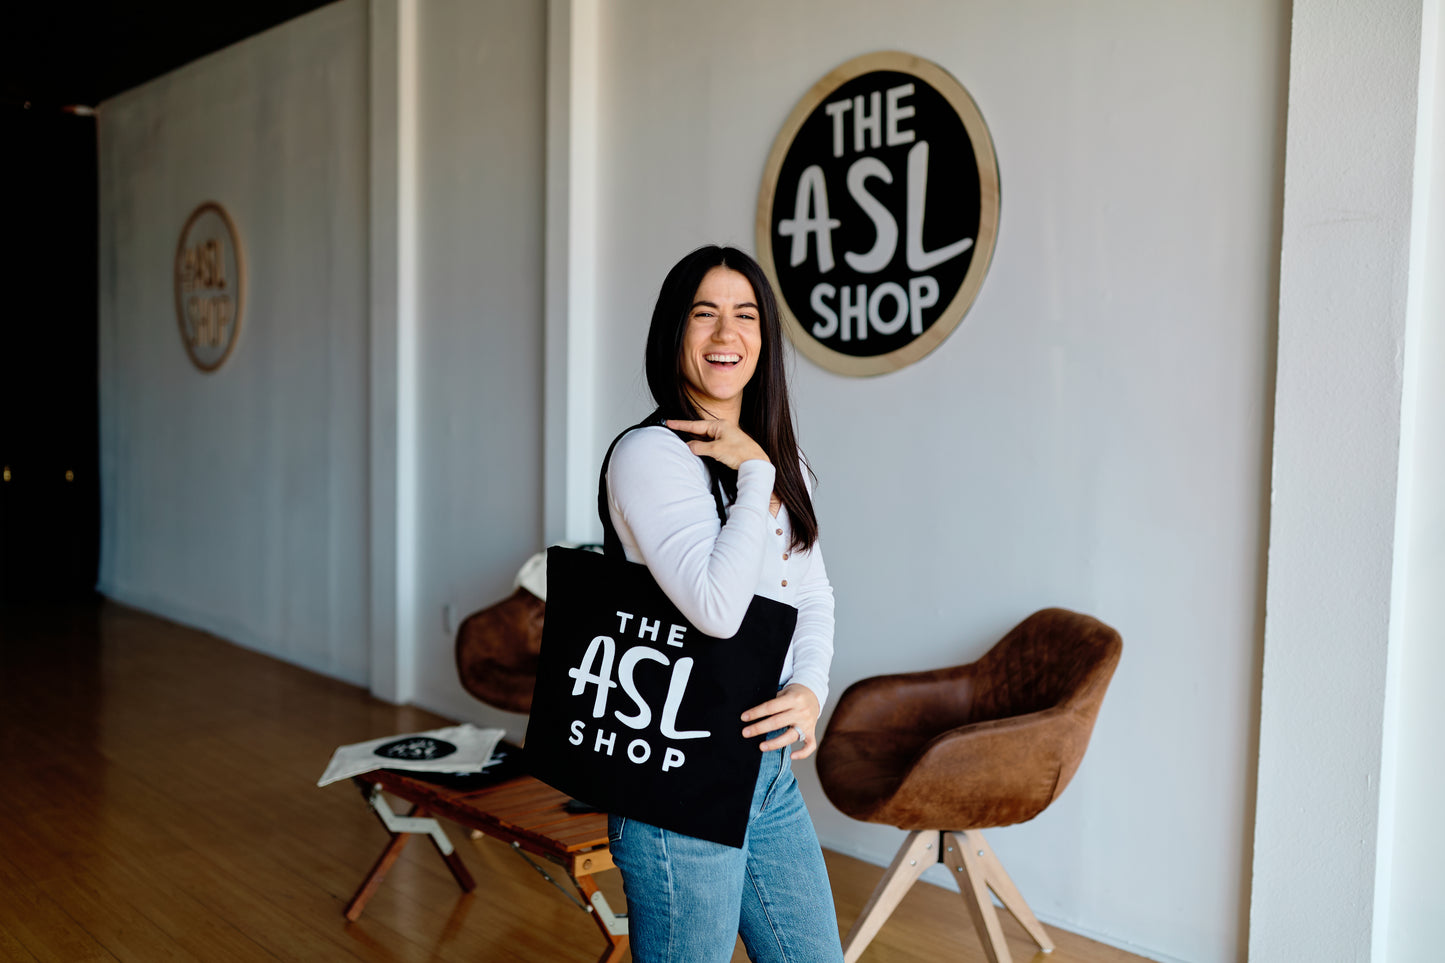 The ASL Shop Black Tote Bag